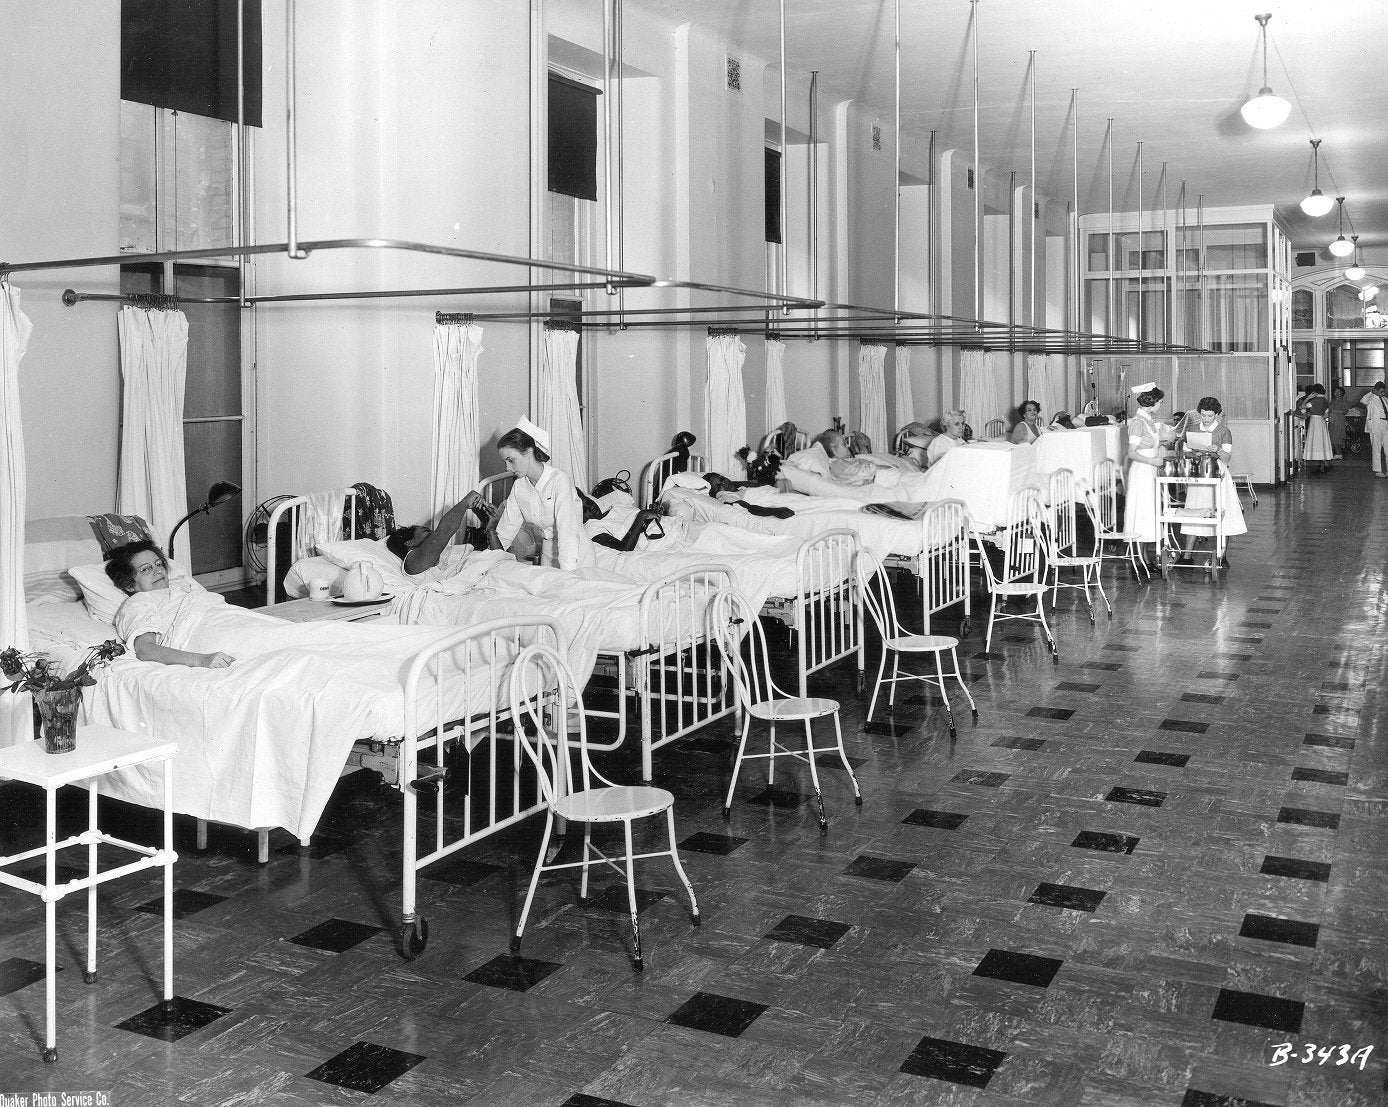 Hospital of the University of Pennsylvania, ward, c. 1950